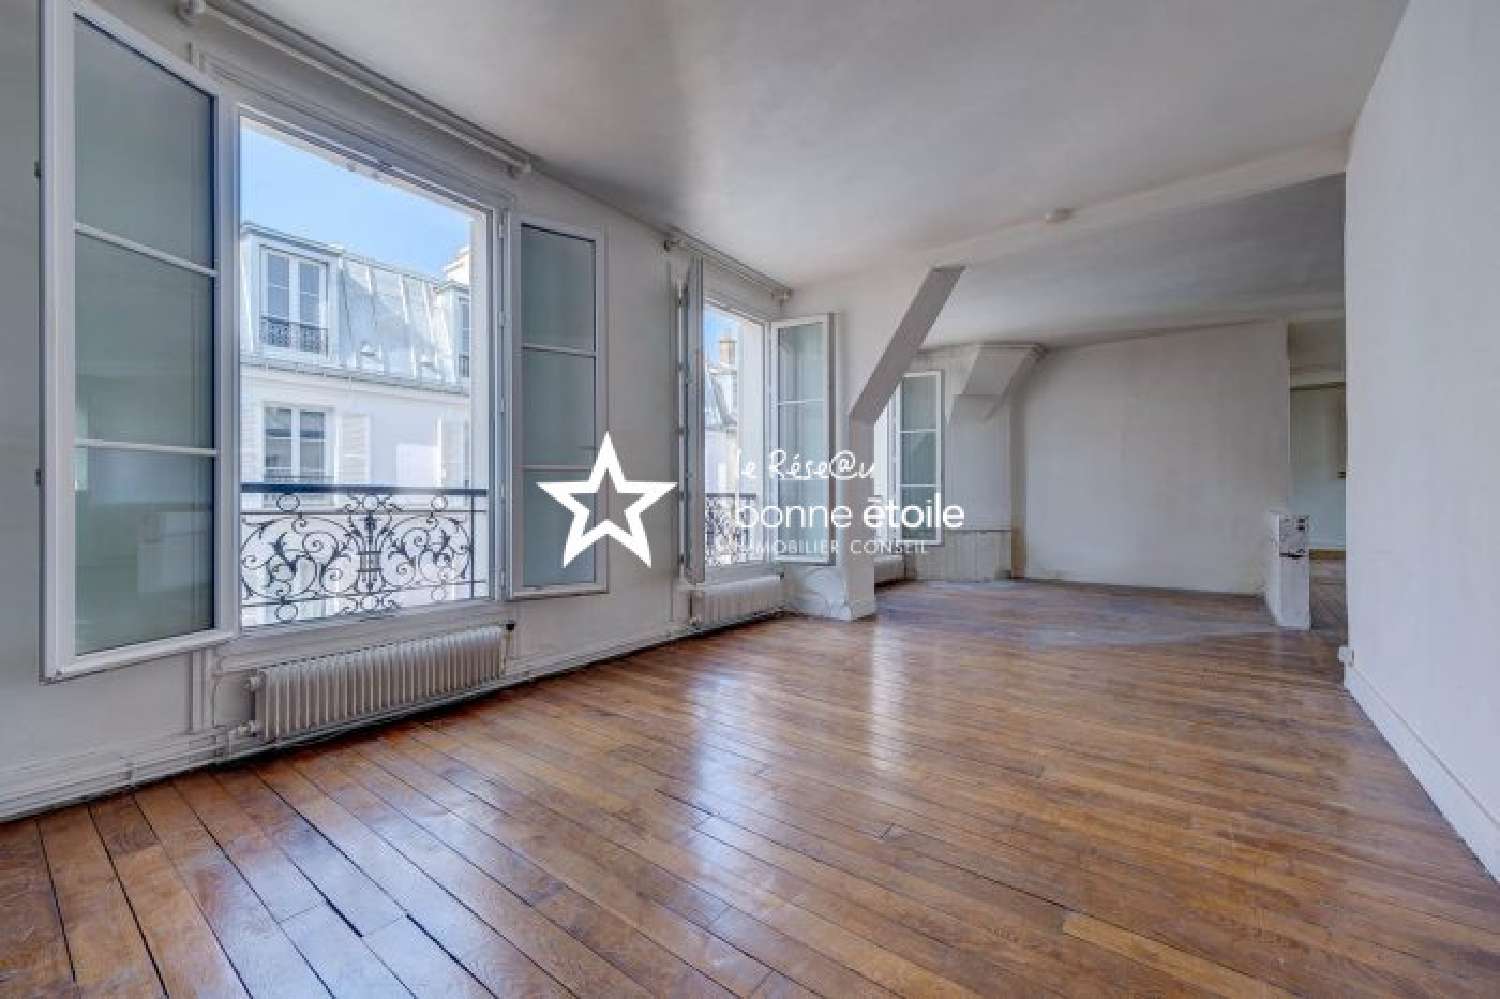  te koop appartement Paris 7e Arrondissement Parijs (Seine) 1